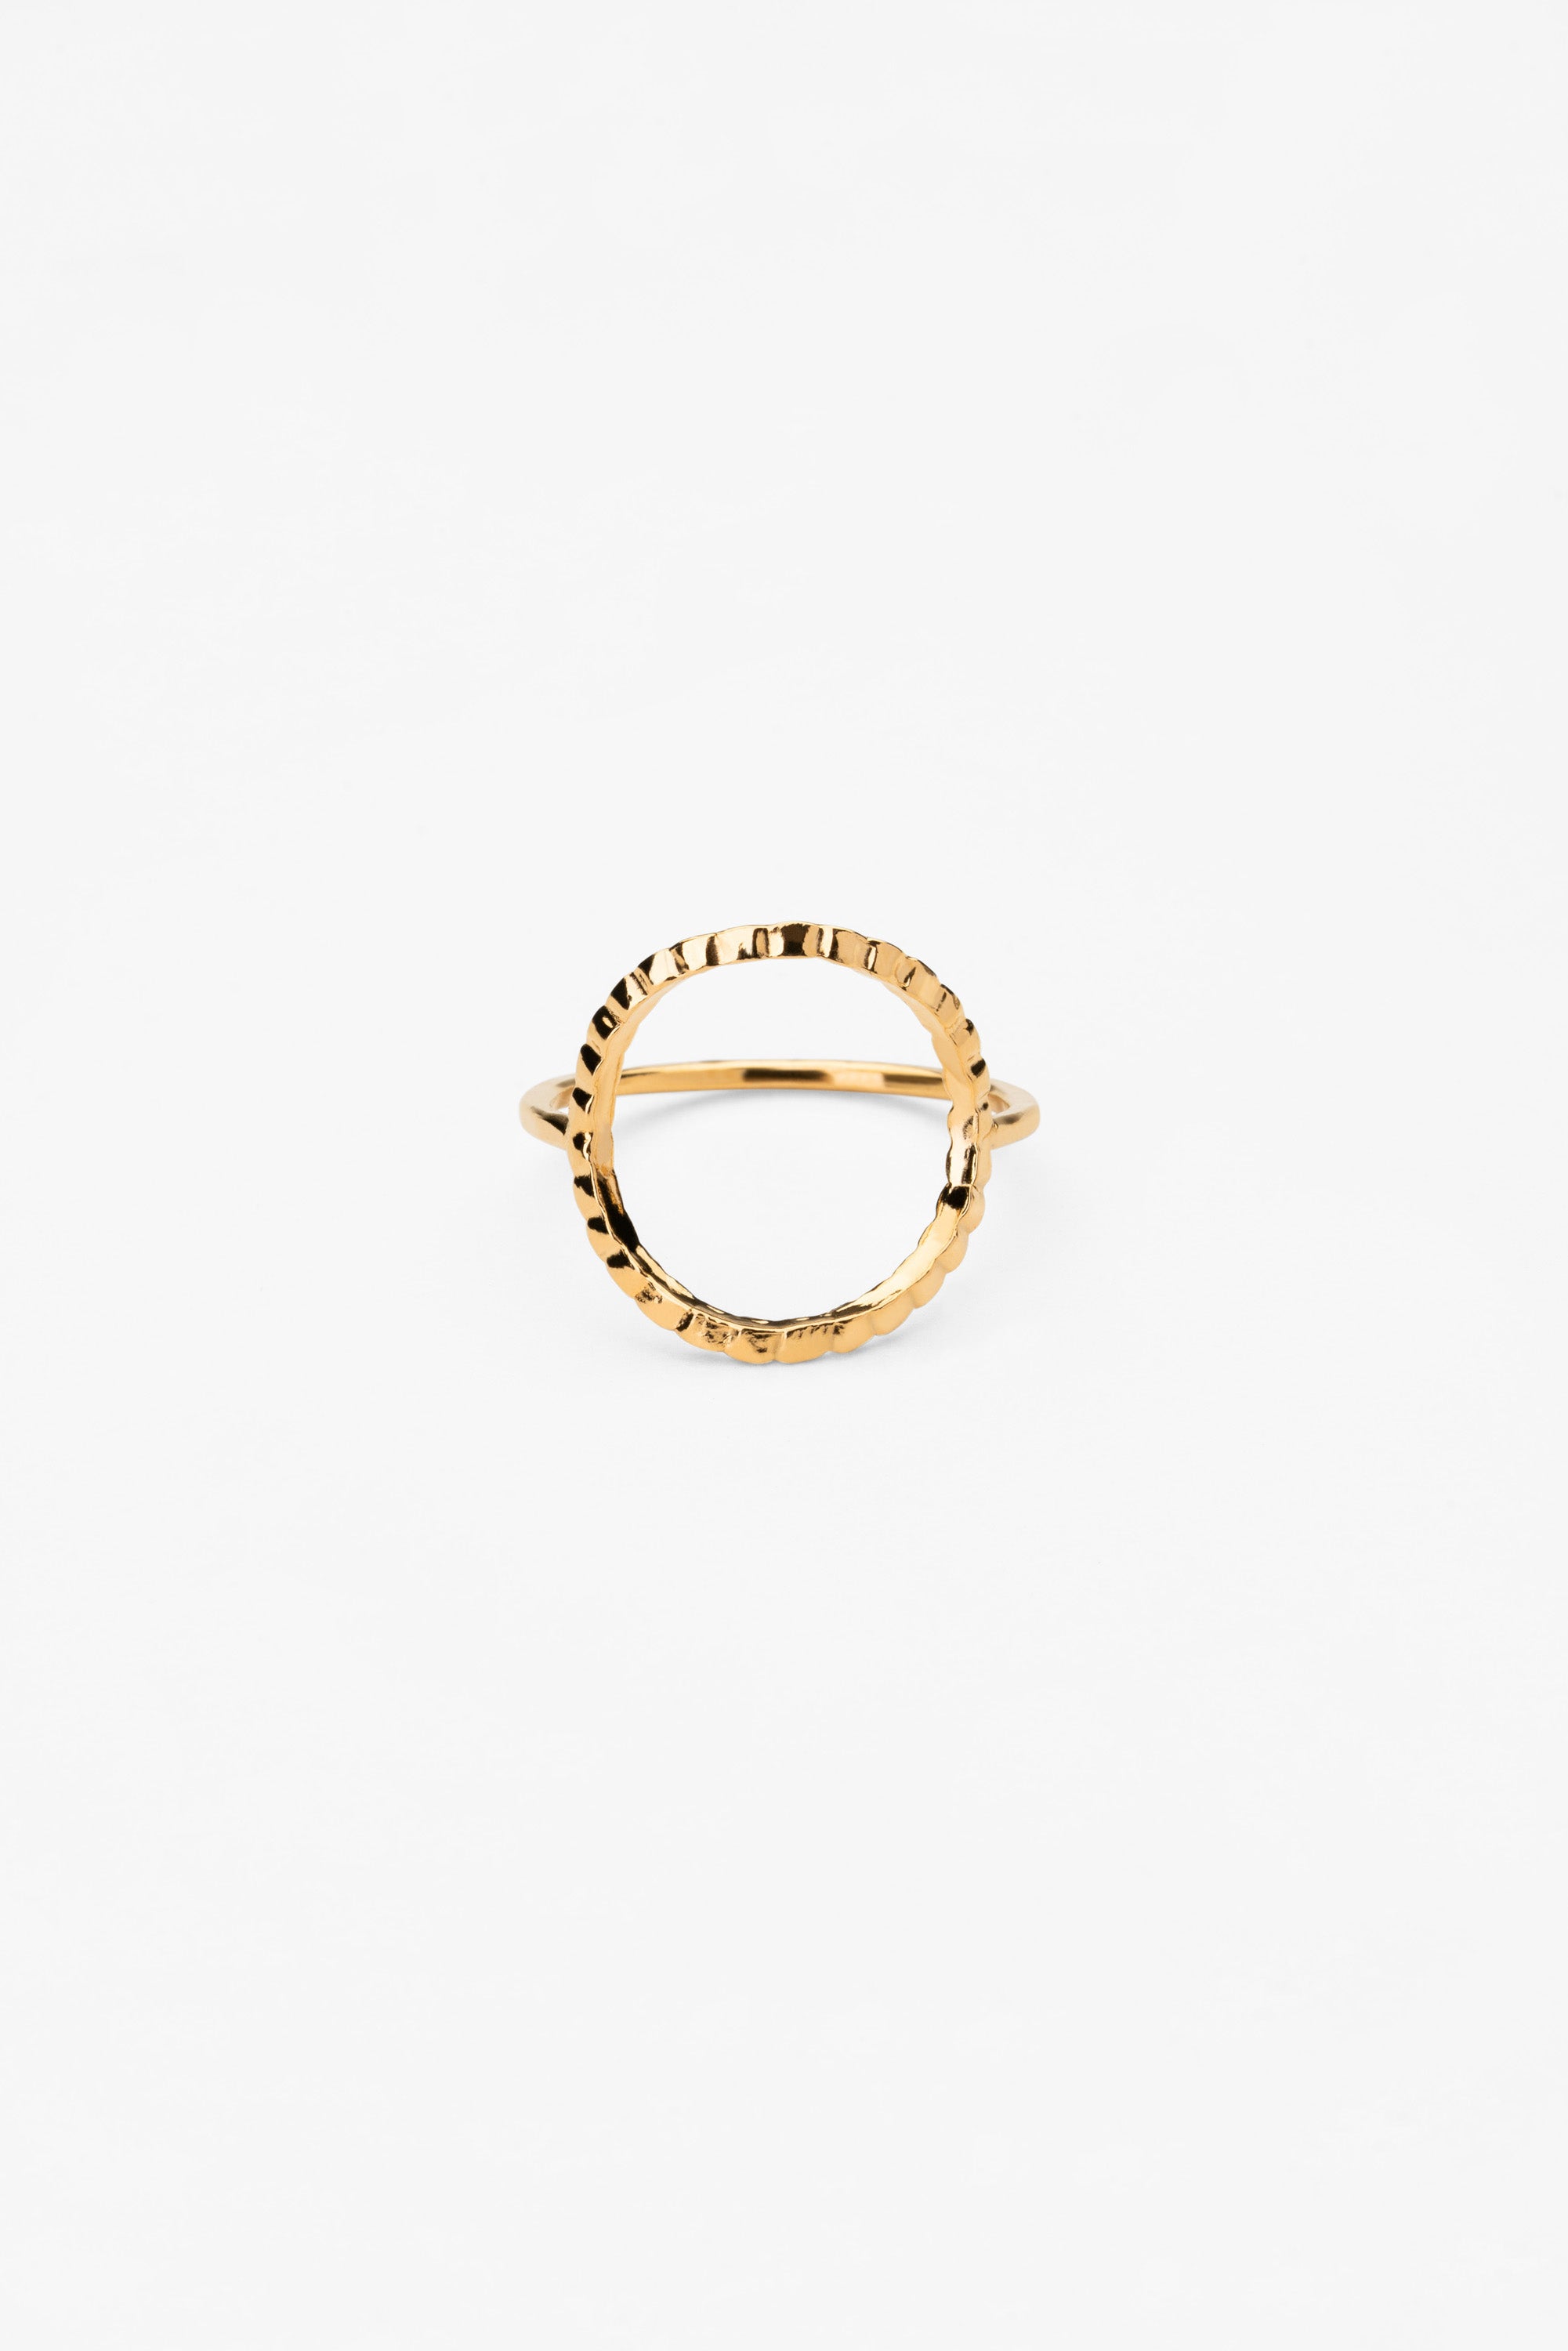 Enchanted Circle Ring, Designed by Keani Hawaii